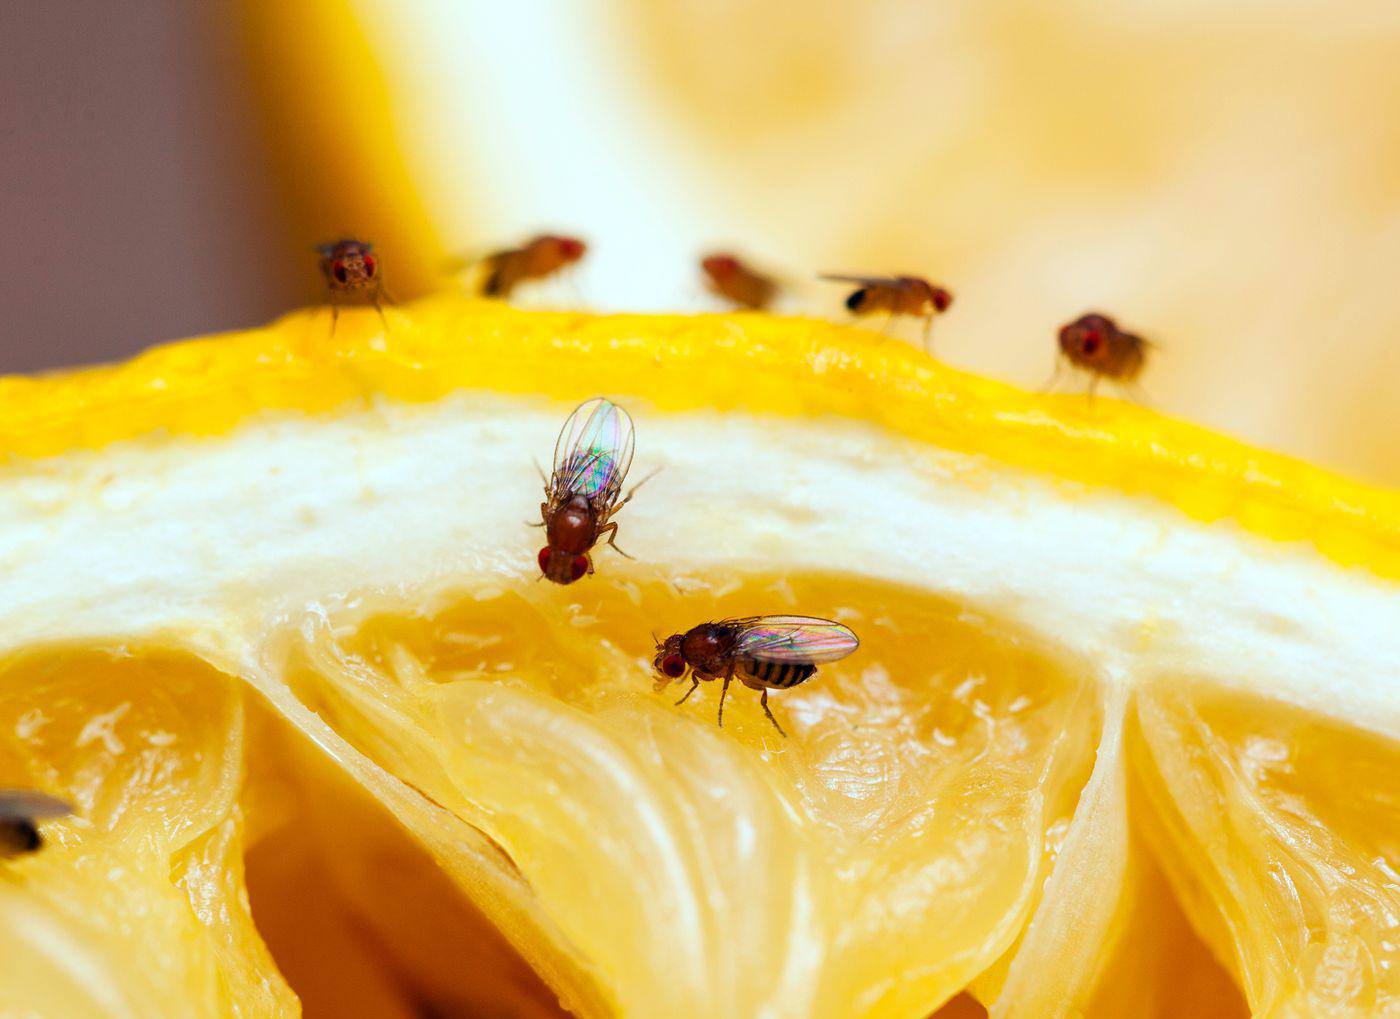 A good way to eliminate fruit flies